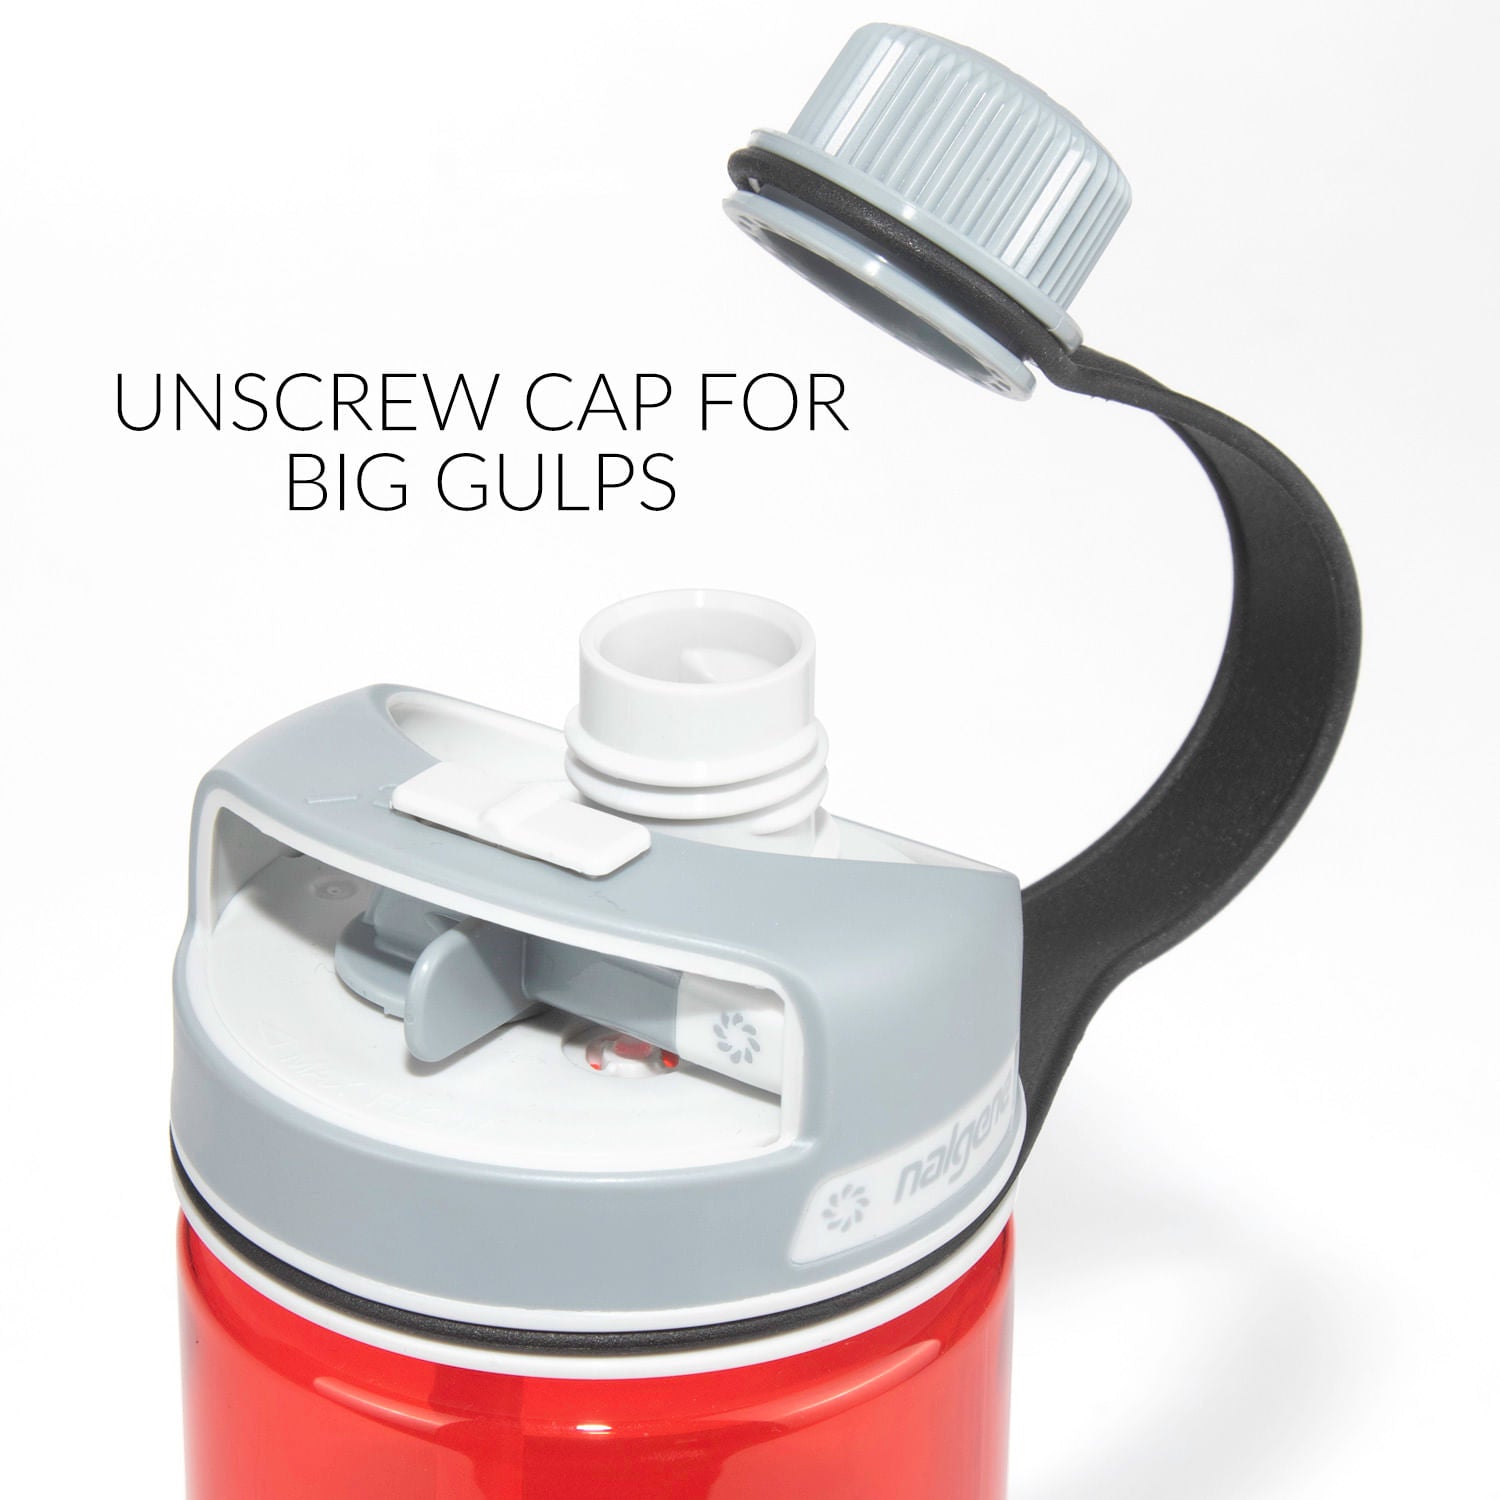 Unscrew cap for big gulps